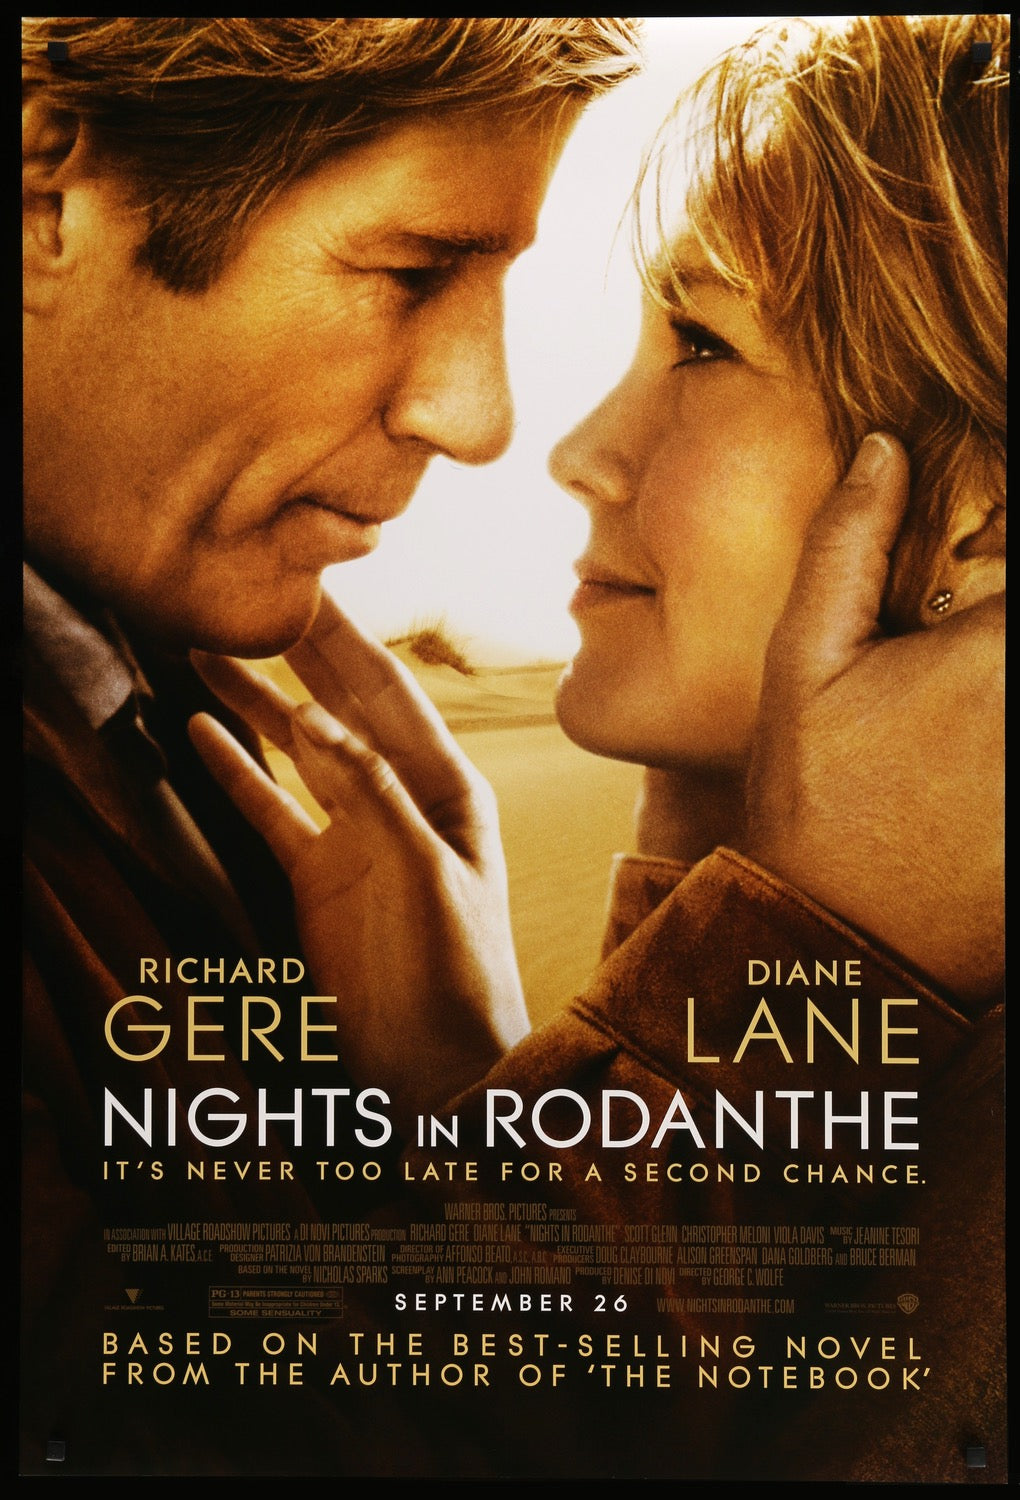 Nights in Rodanthe (2008) original movie poster for sale at Original Film Art